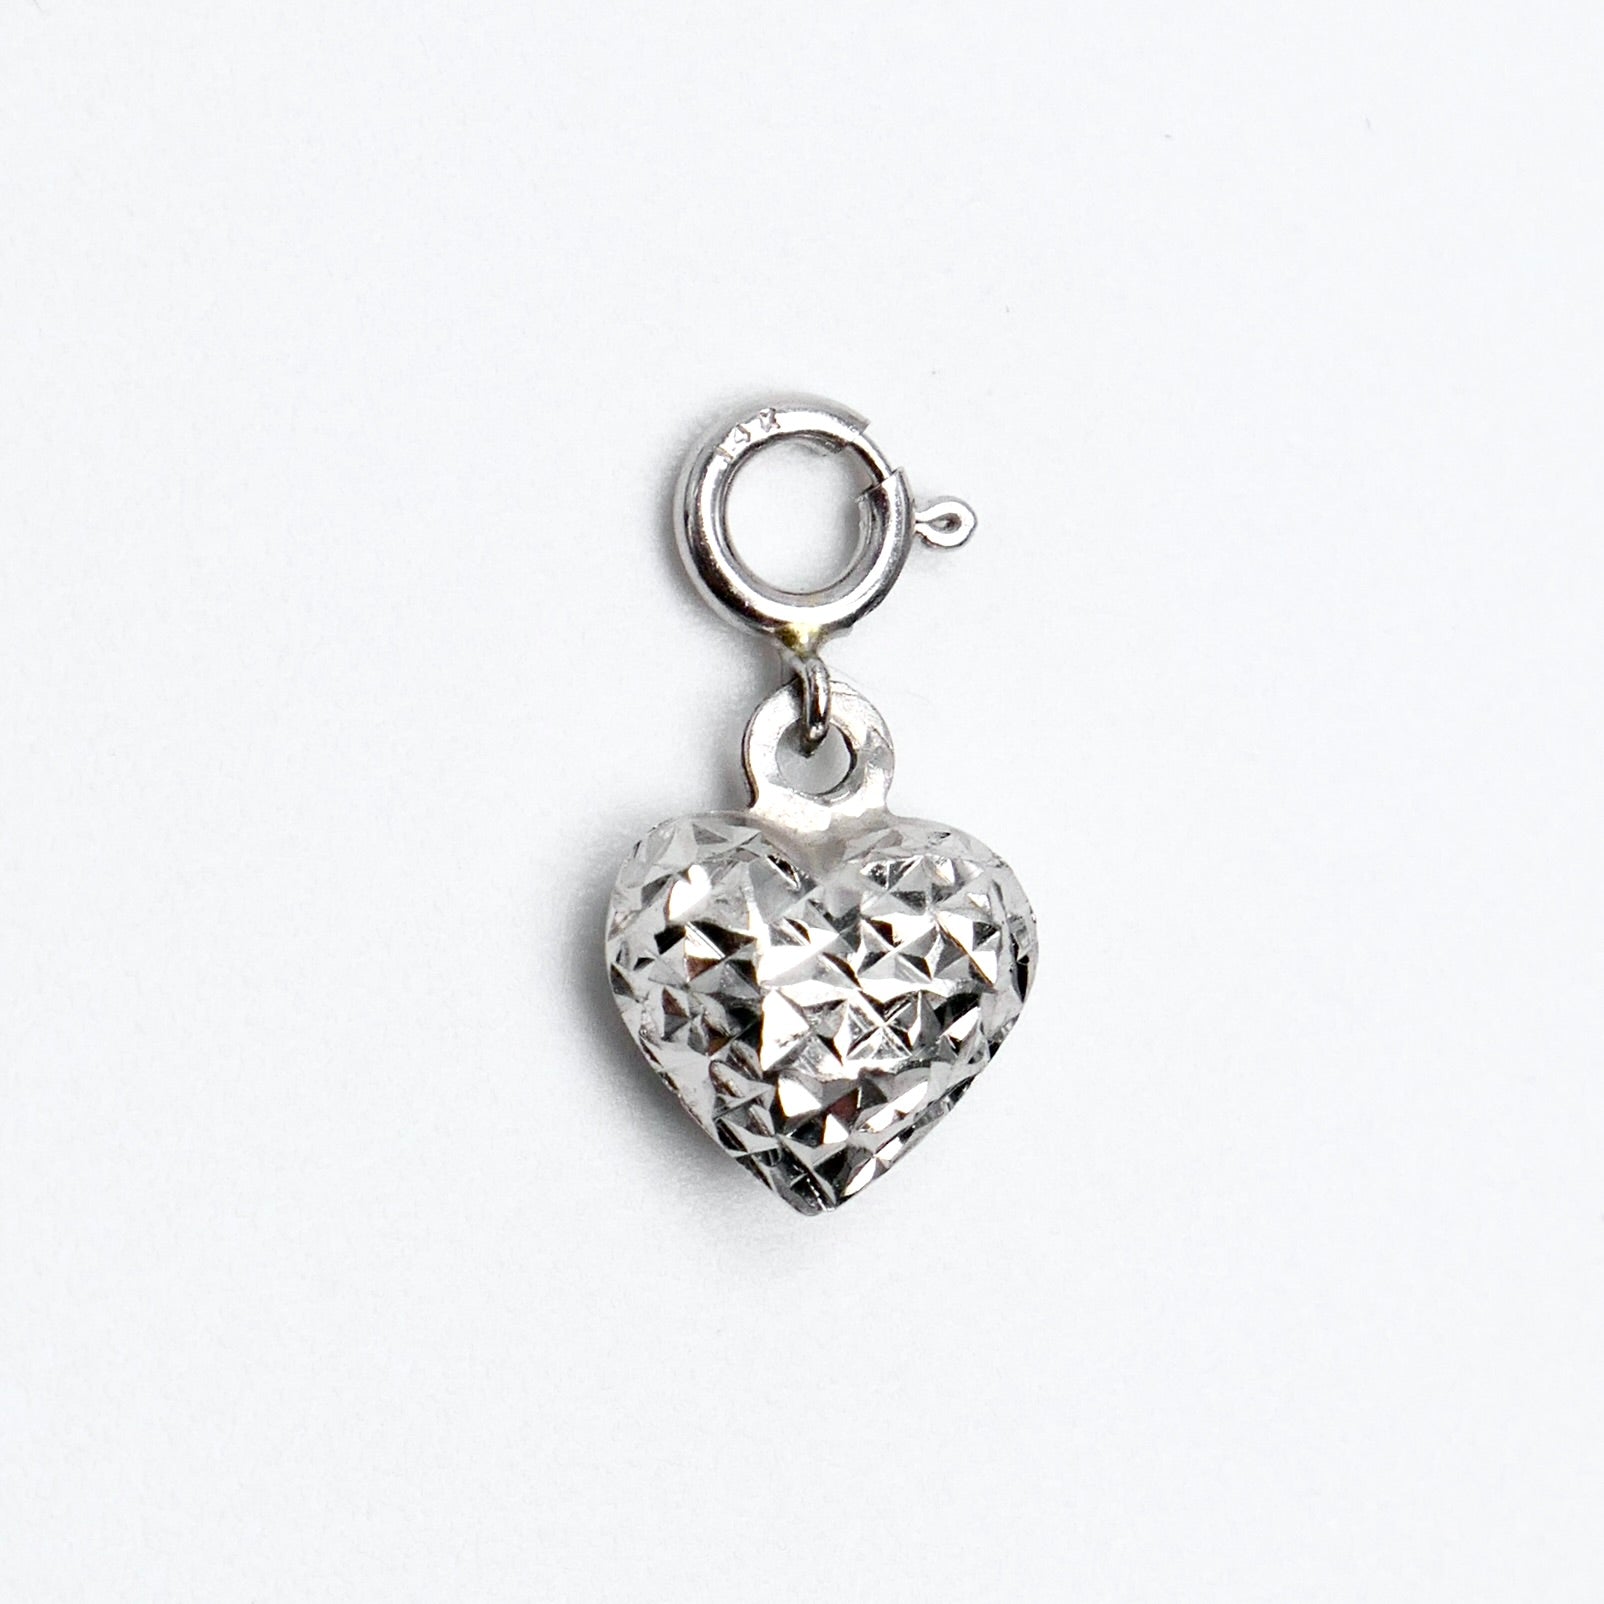 14K White Gold 14mm Diamond Cut Puffed Heart Charm w/Spring Clasp